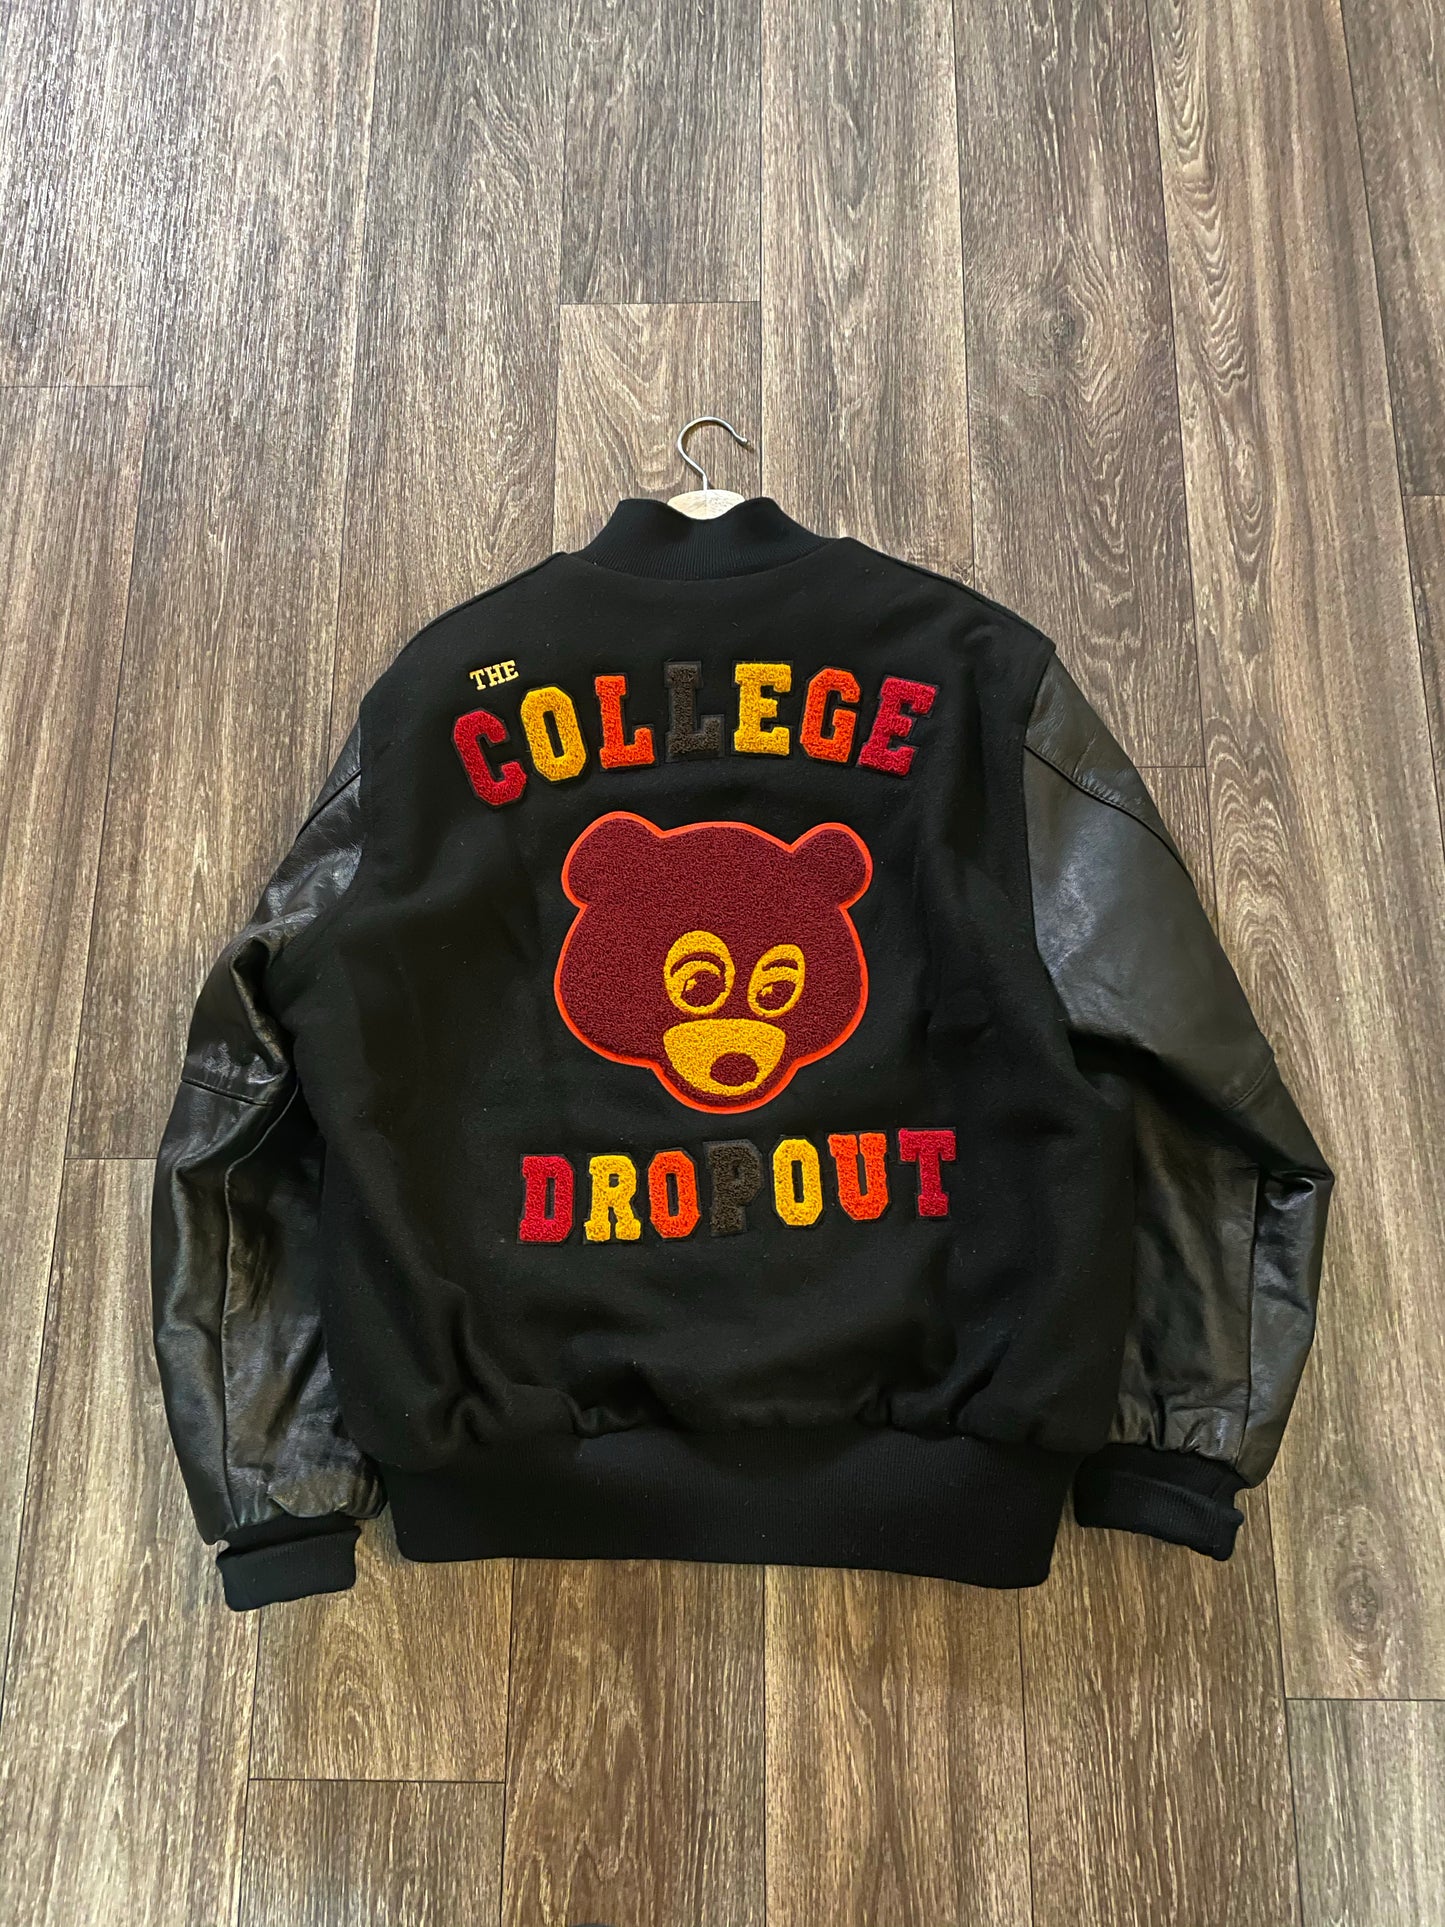 Kanye west “The College Dropout” Letterman jacket